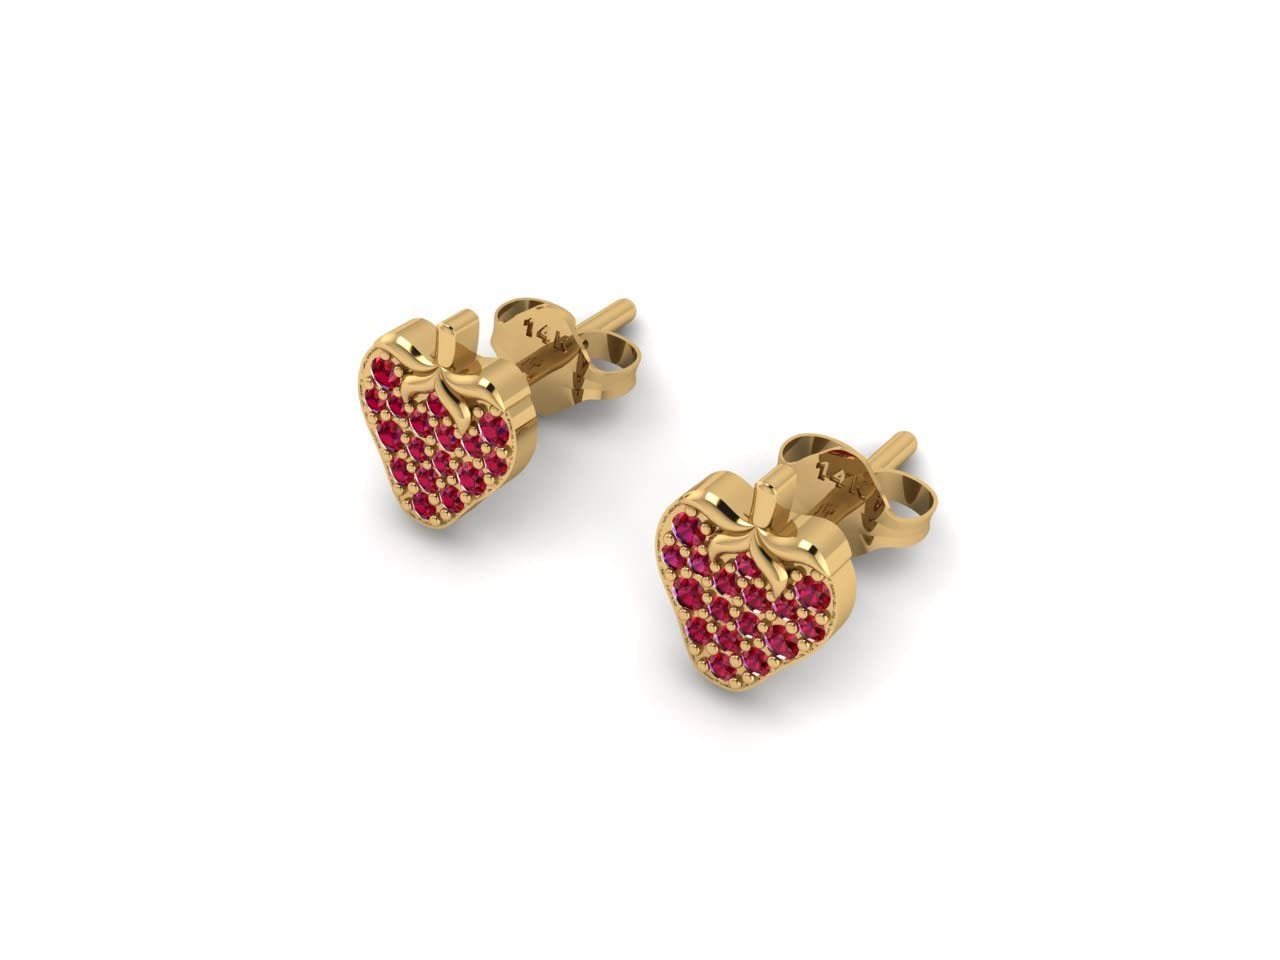 RATNAVALI ARTS 14K Pure Yellow Gold Natural Gemstone Strawberry Earrings for Women | Natural Gemstones | Valentine's Gift